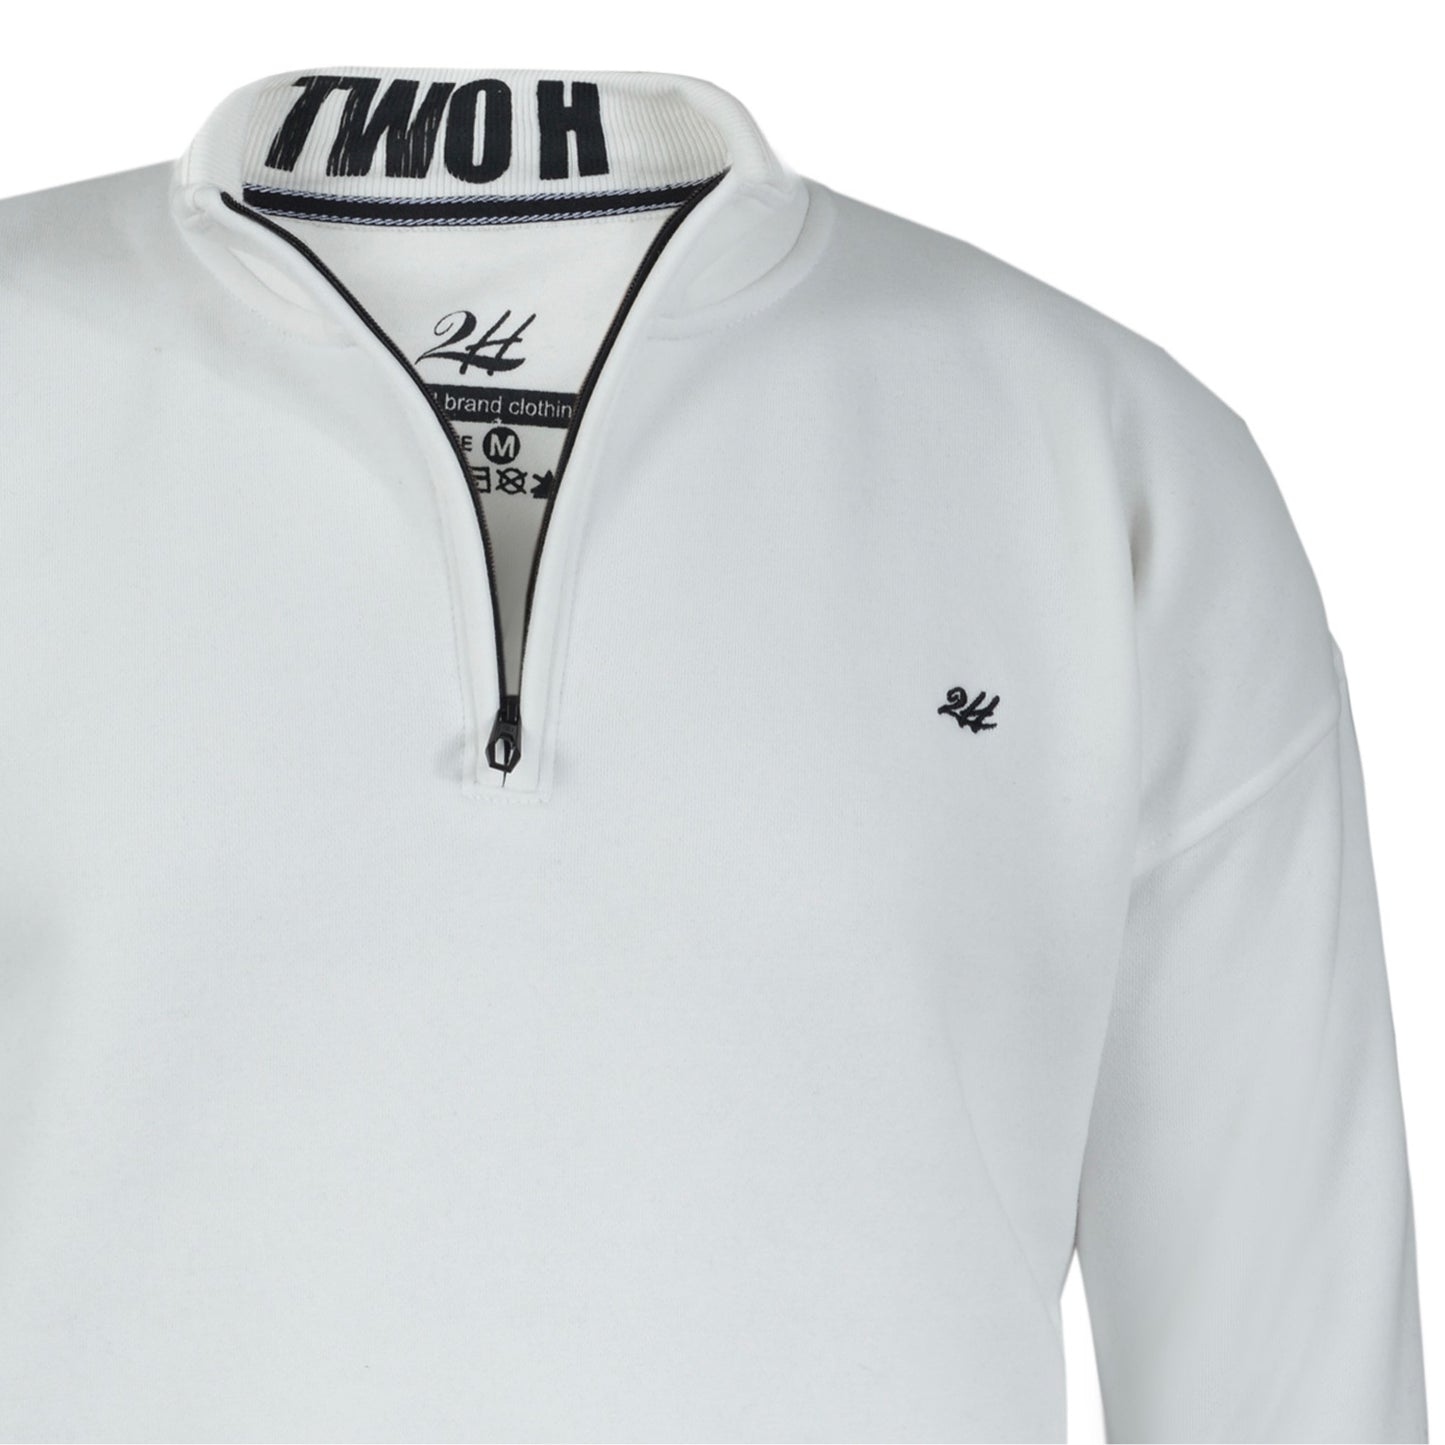 2H #6122 White Half Zipper Sweater With High Neck